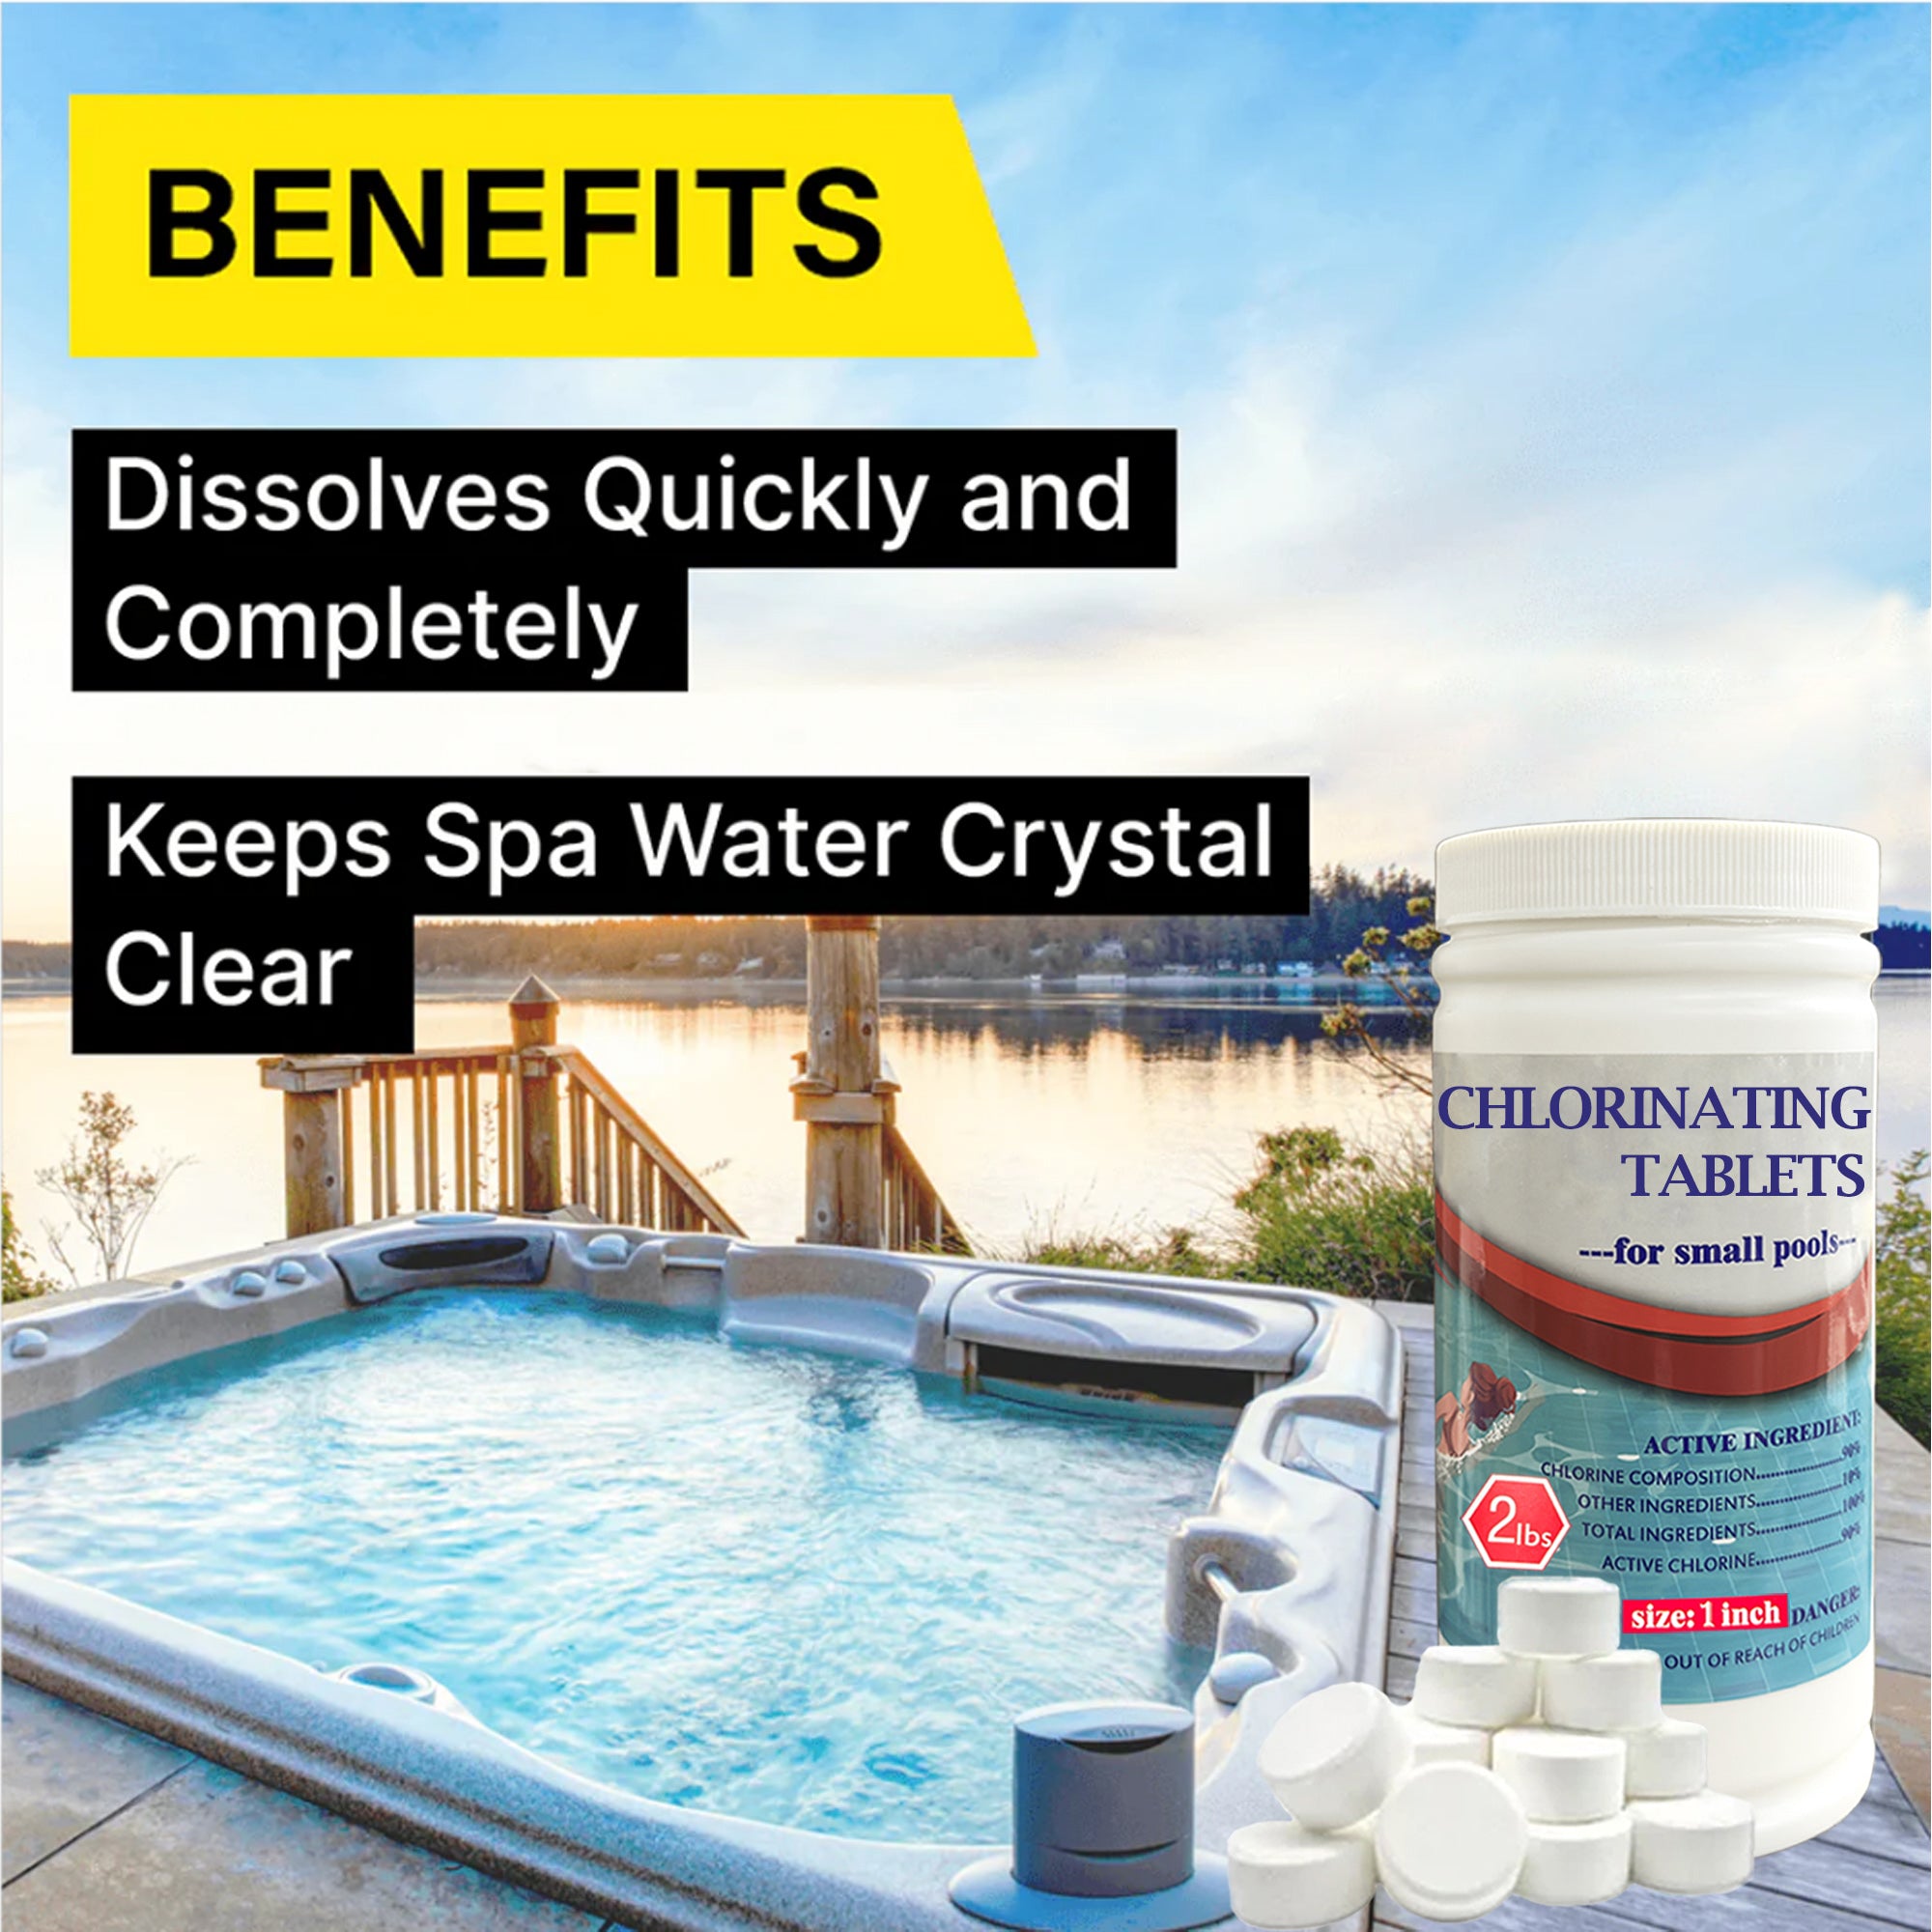 Keep Spa Water Crystal Clear